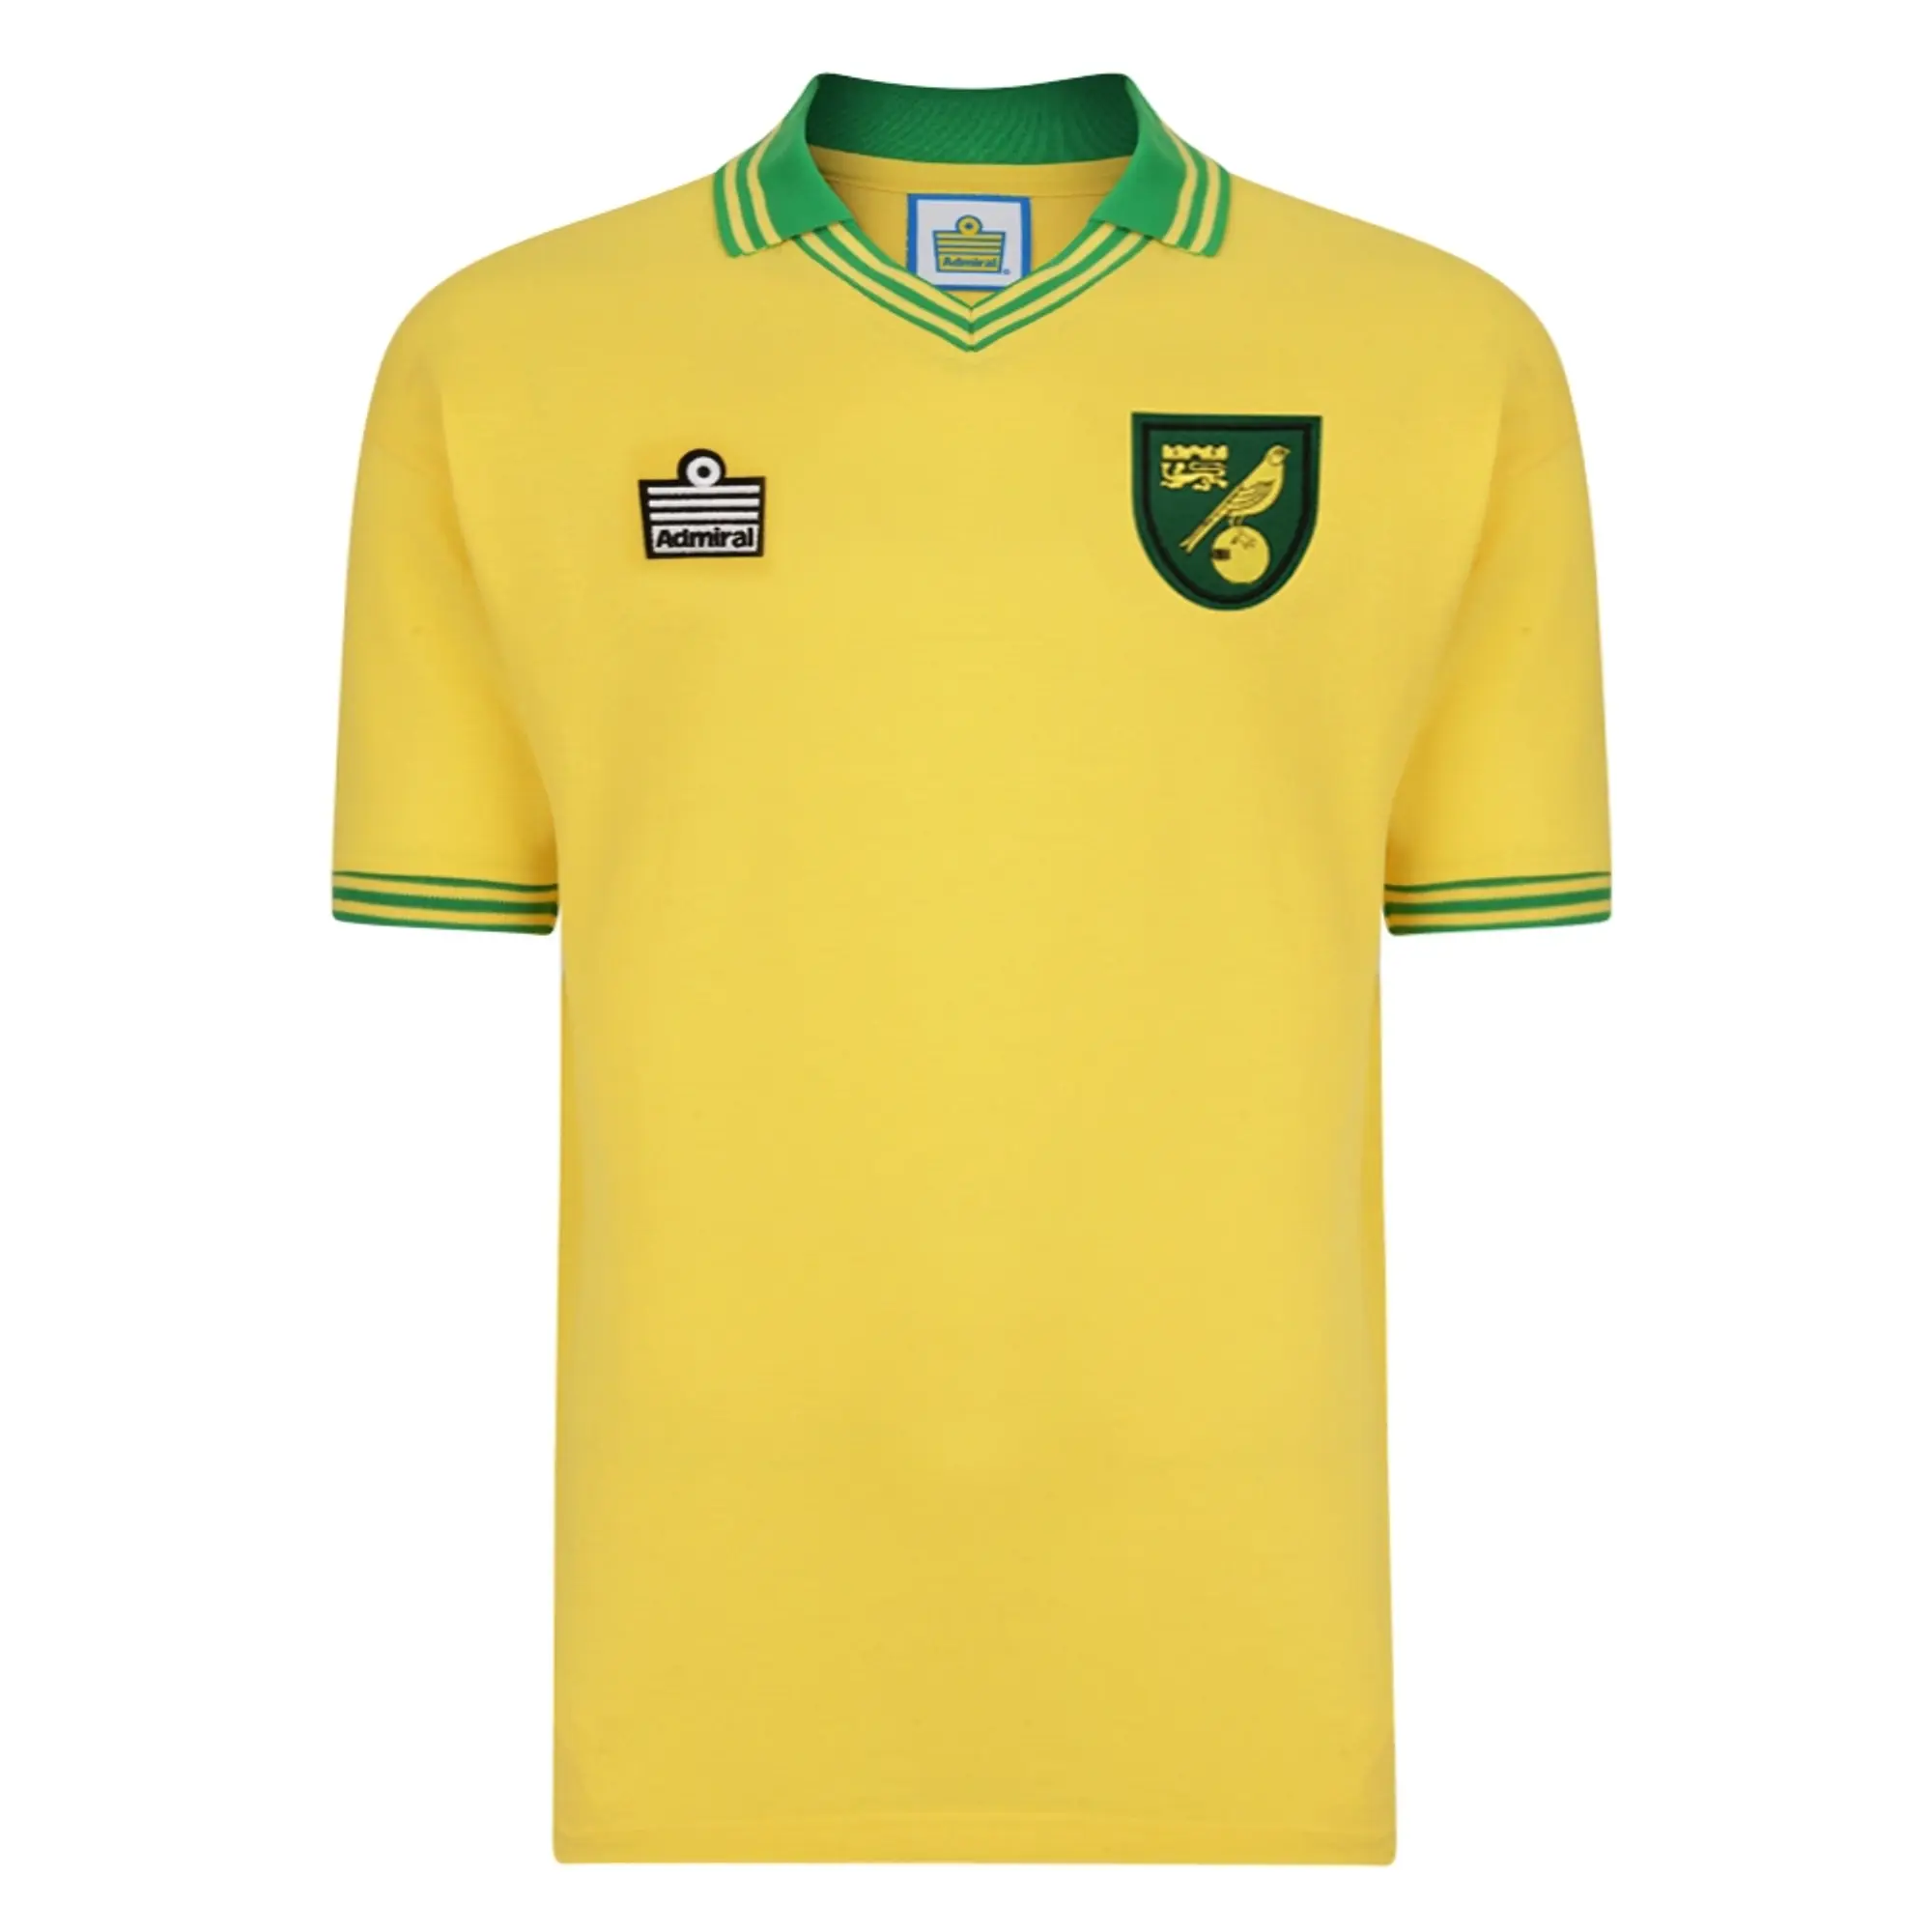 Score Draw Norwich City Mens SS Home Shirt 1978/79